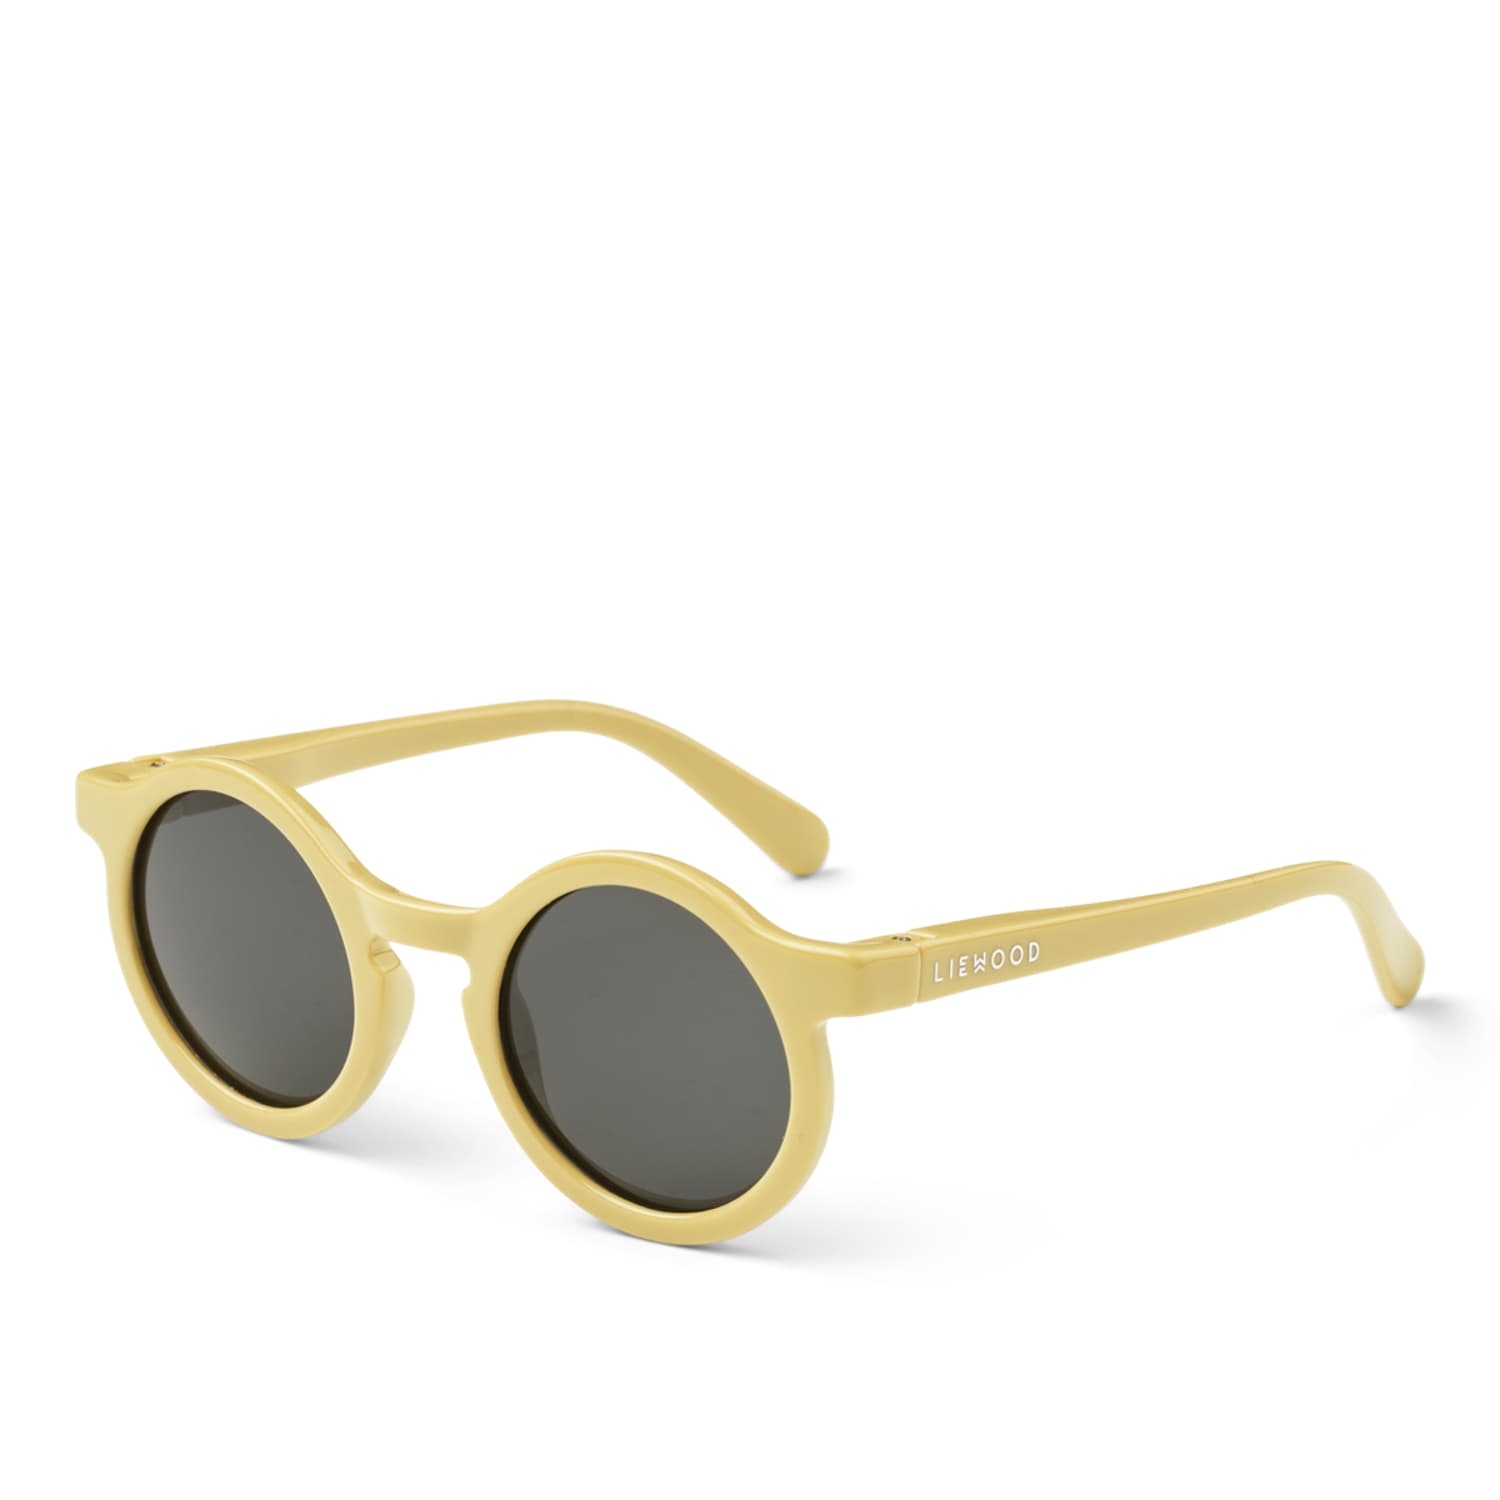 Darla Sunglasses 0-3 Years (Crispy Corn)